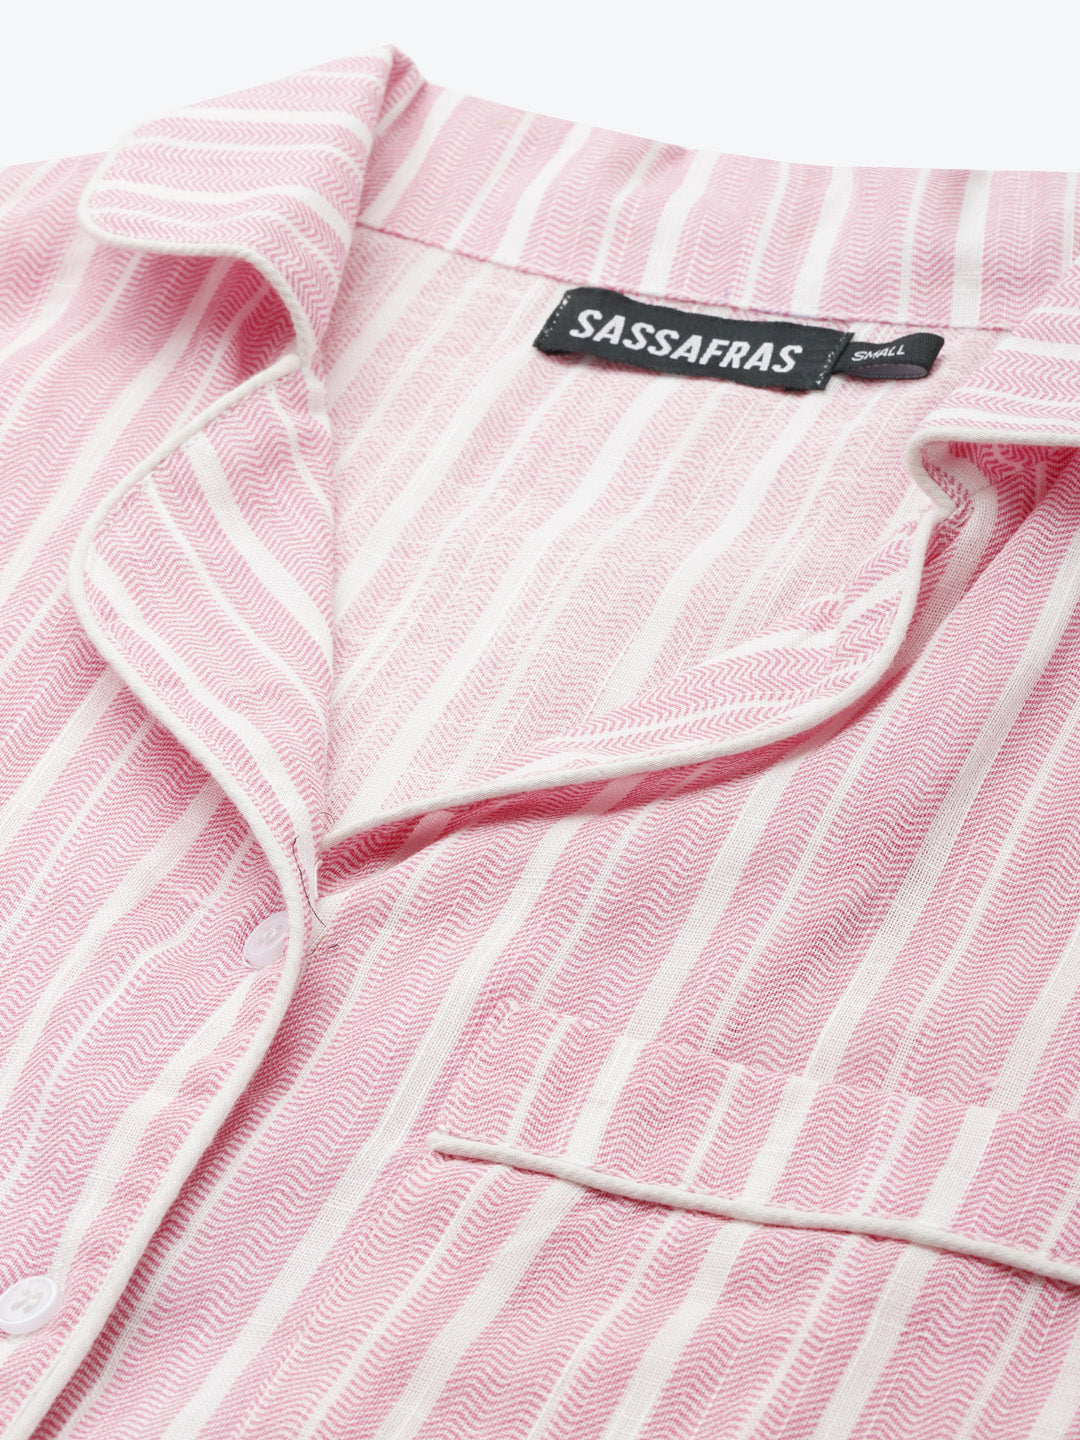 Pink & White Stripes Night Suit